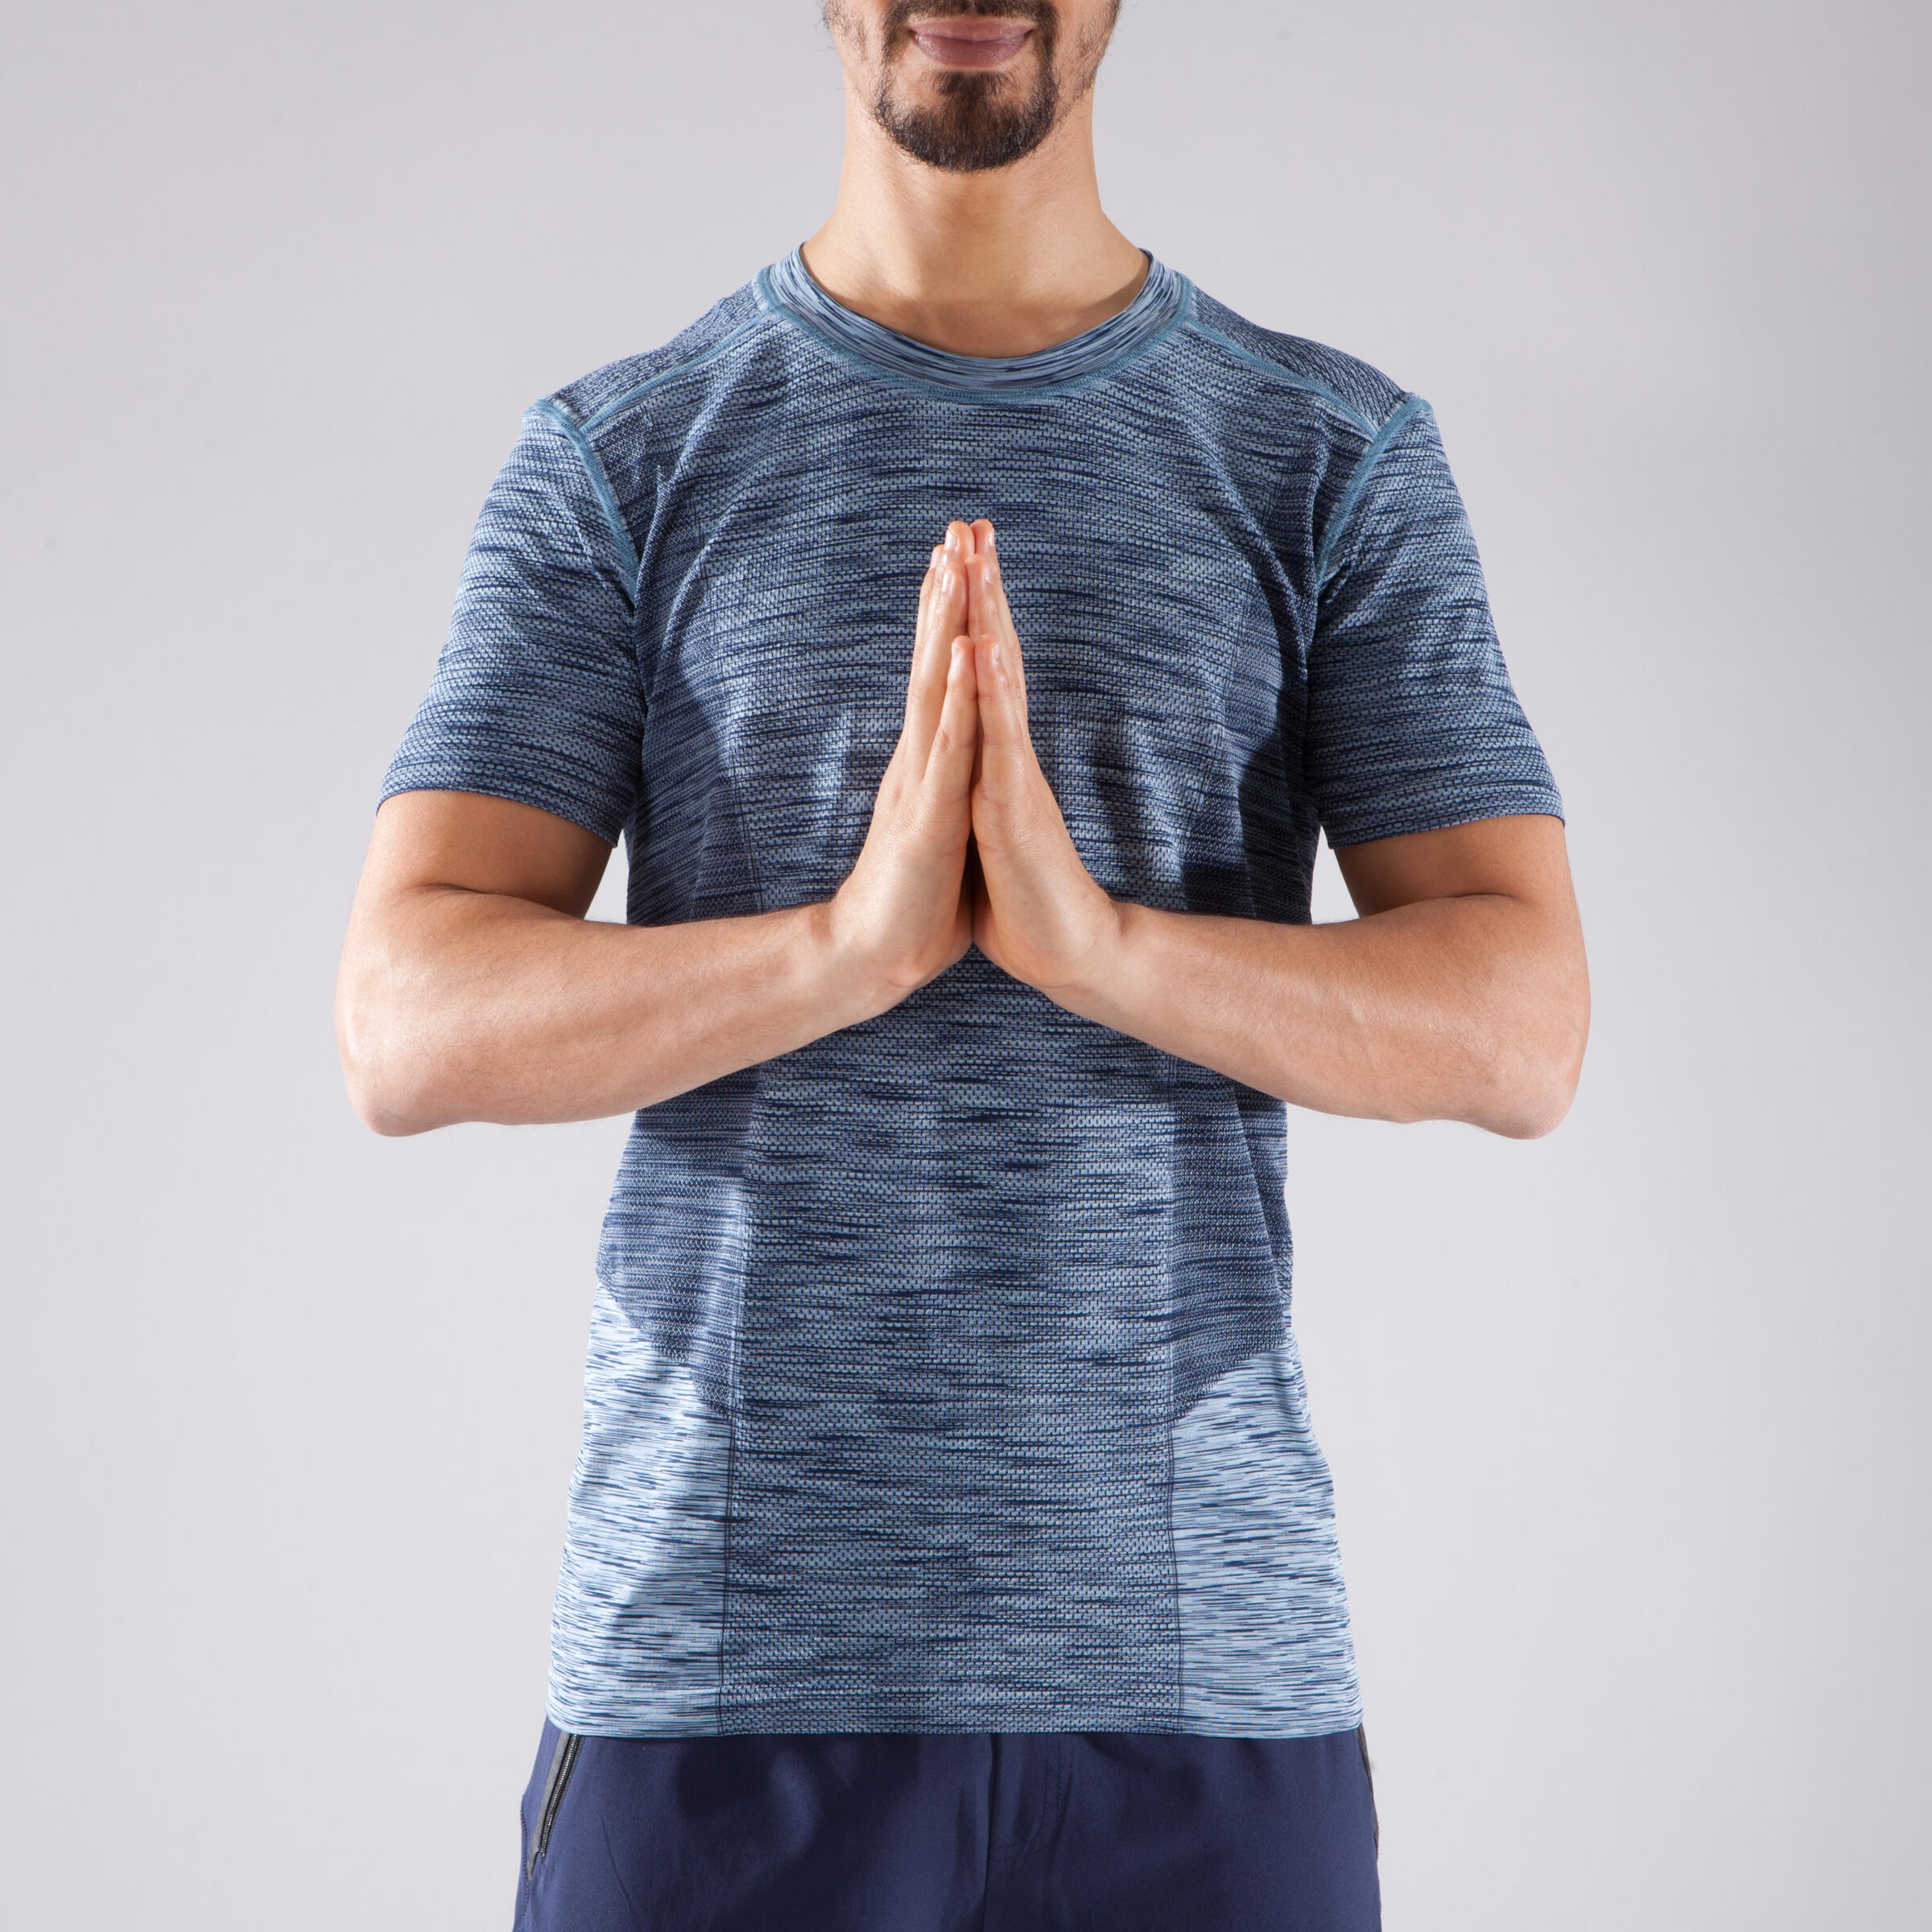 decathlon yoga t shirt